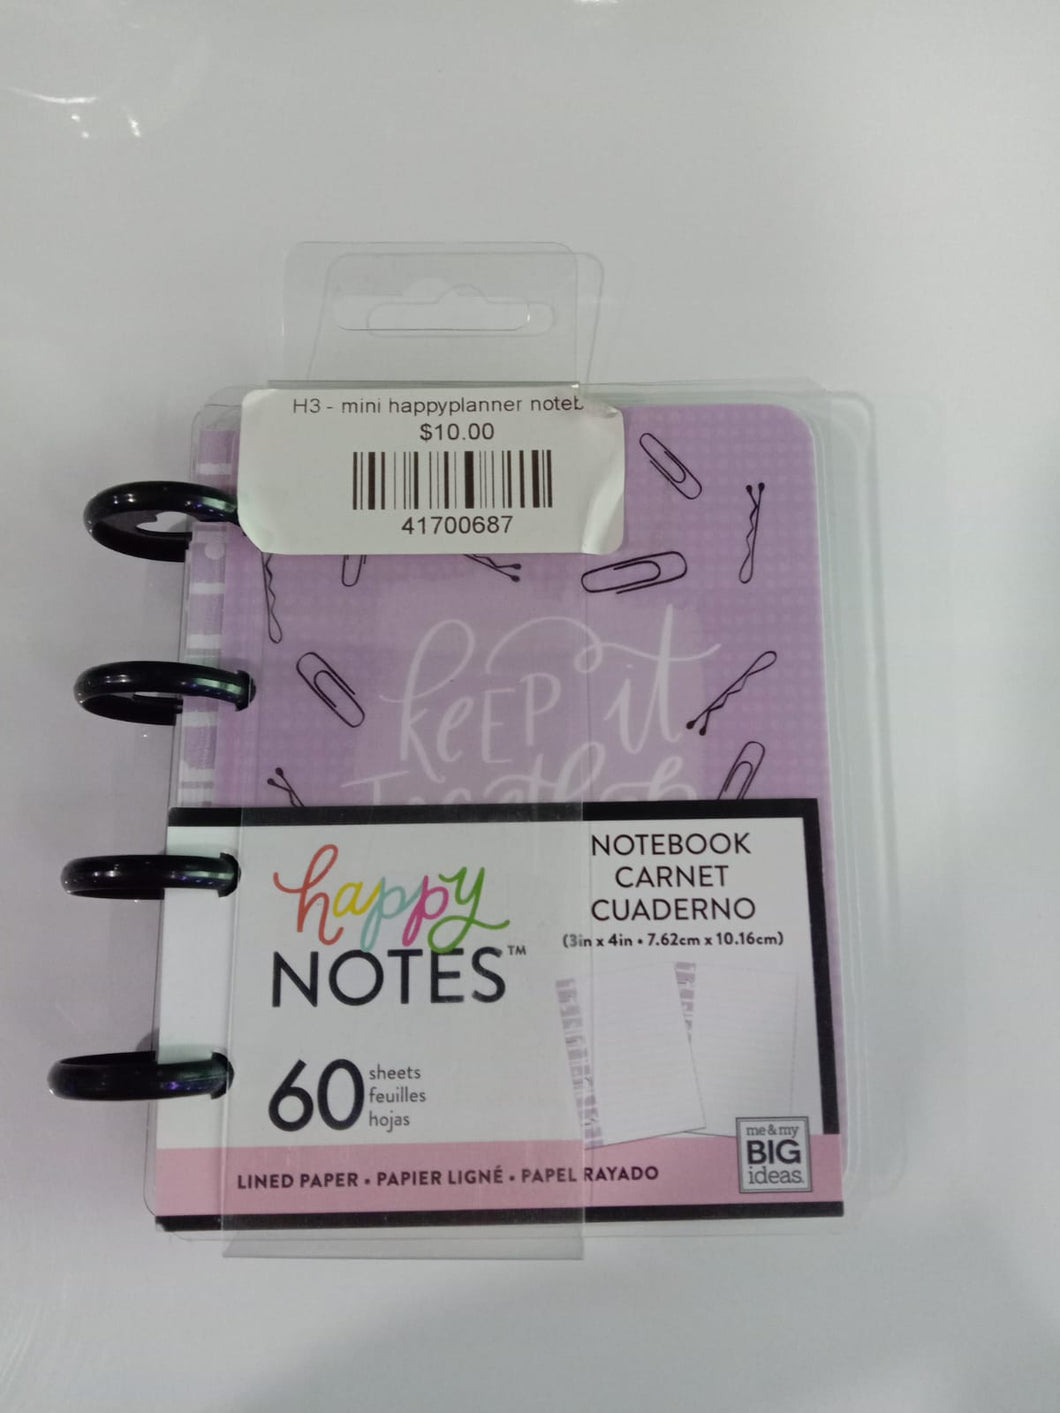 H3 - mini happyplanner notebook